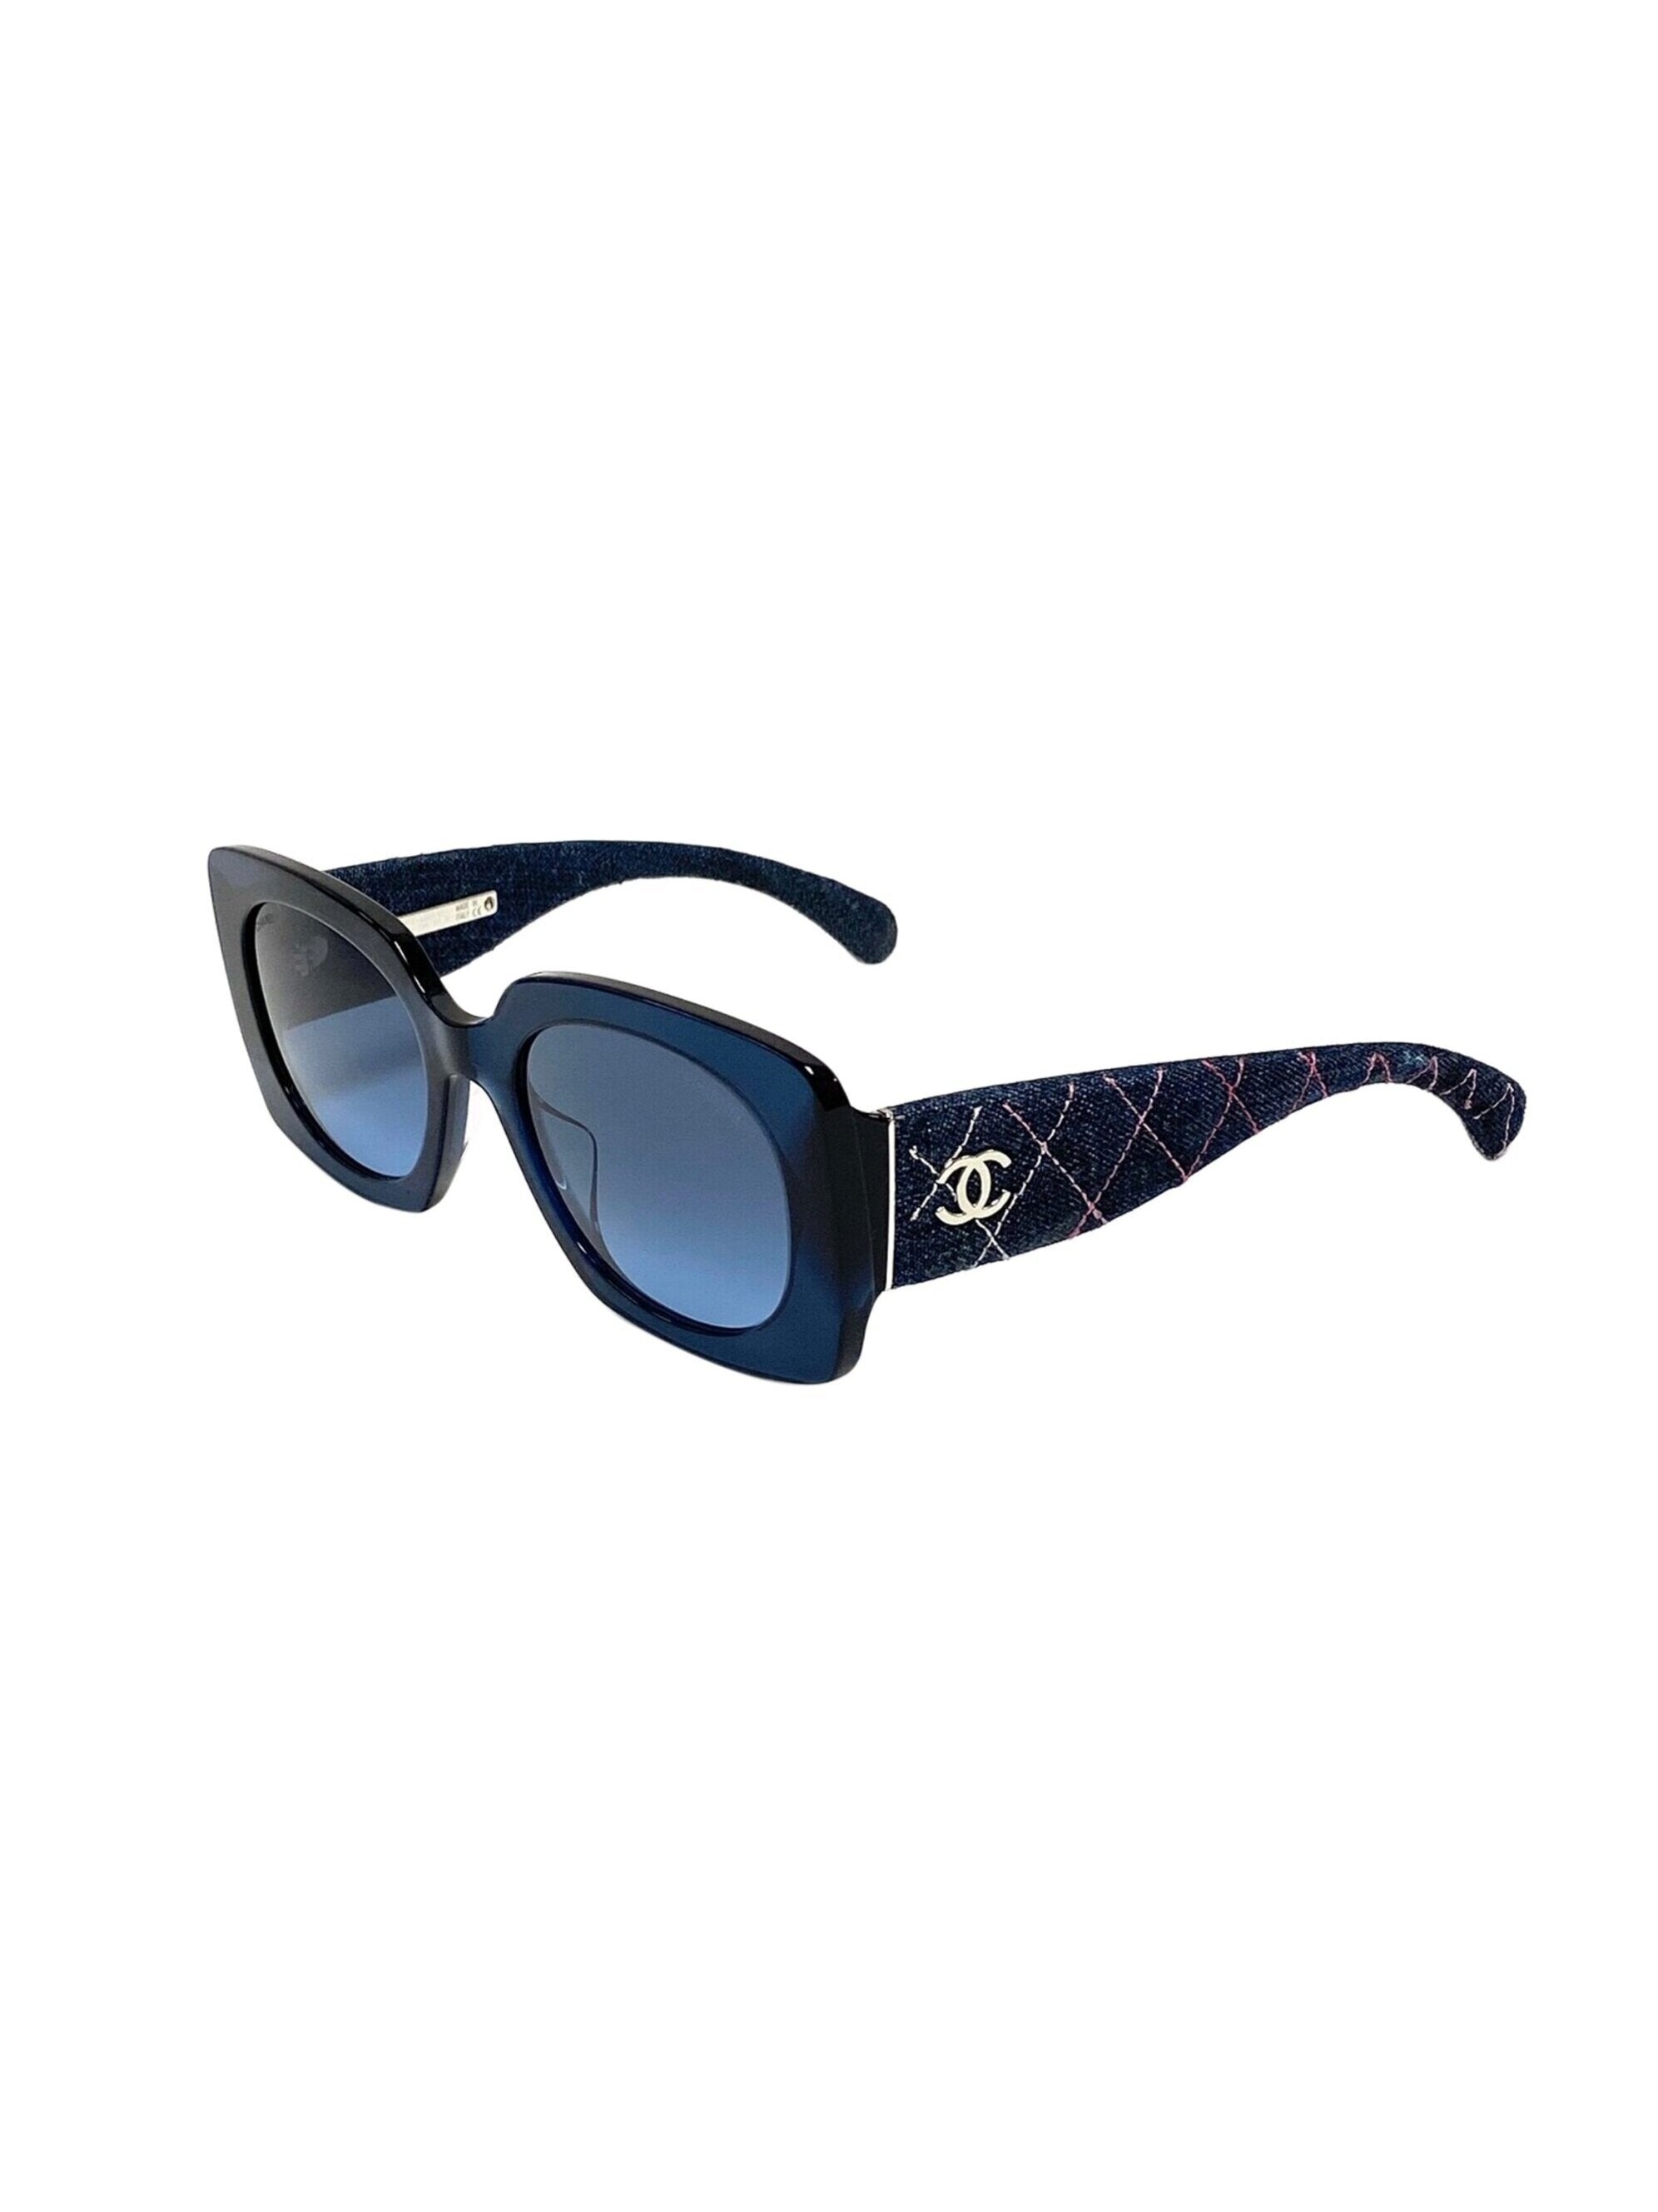 Chanel Black Denim CC Sunglasses Chanel | TLC